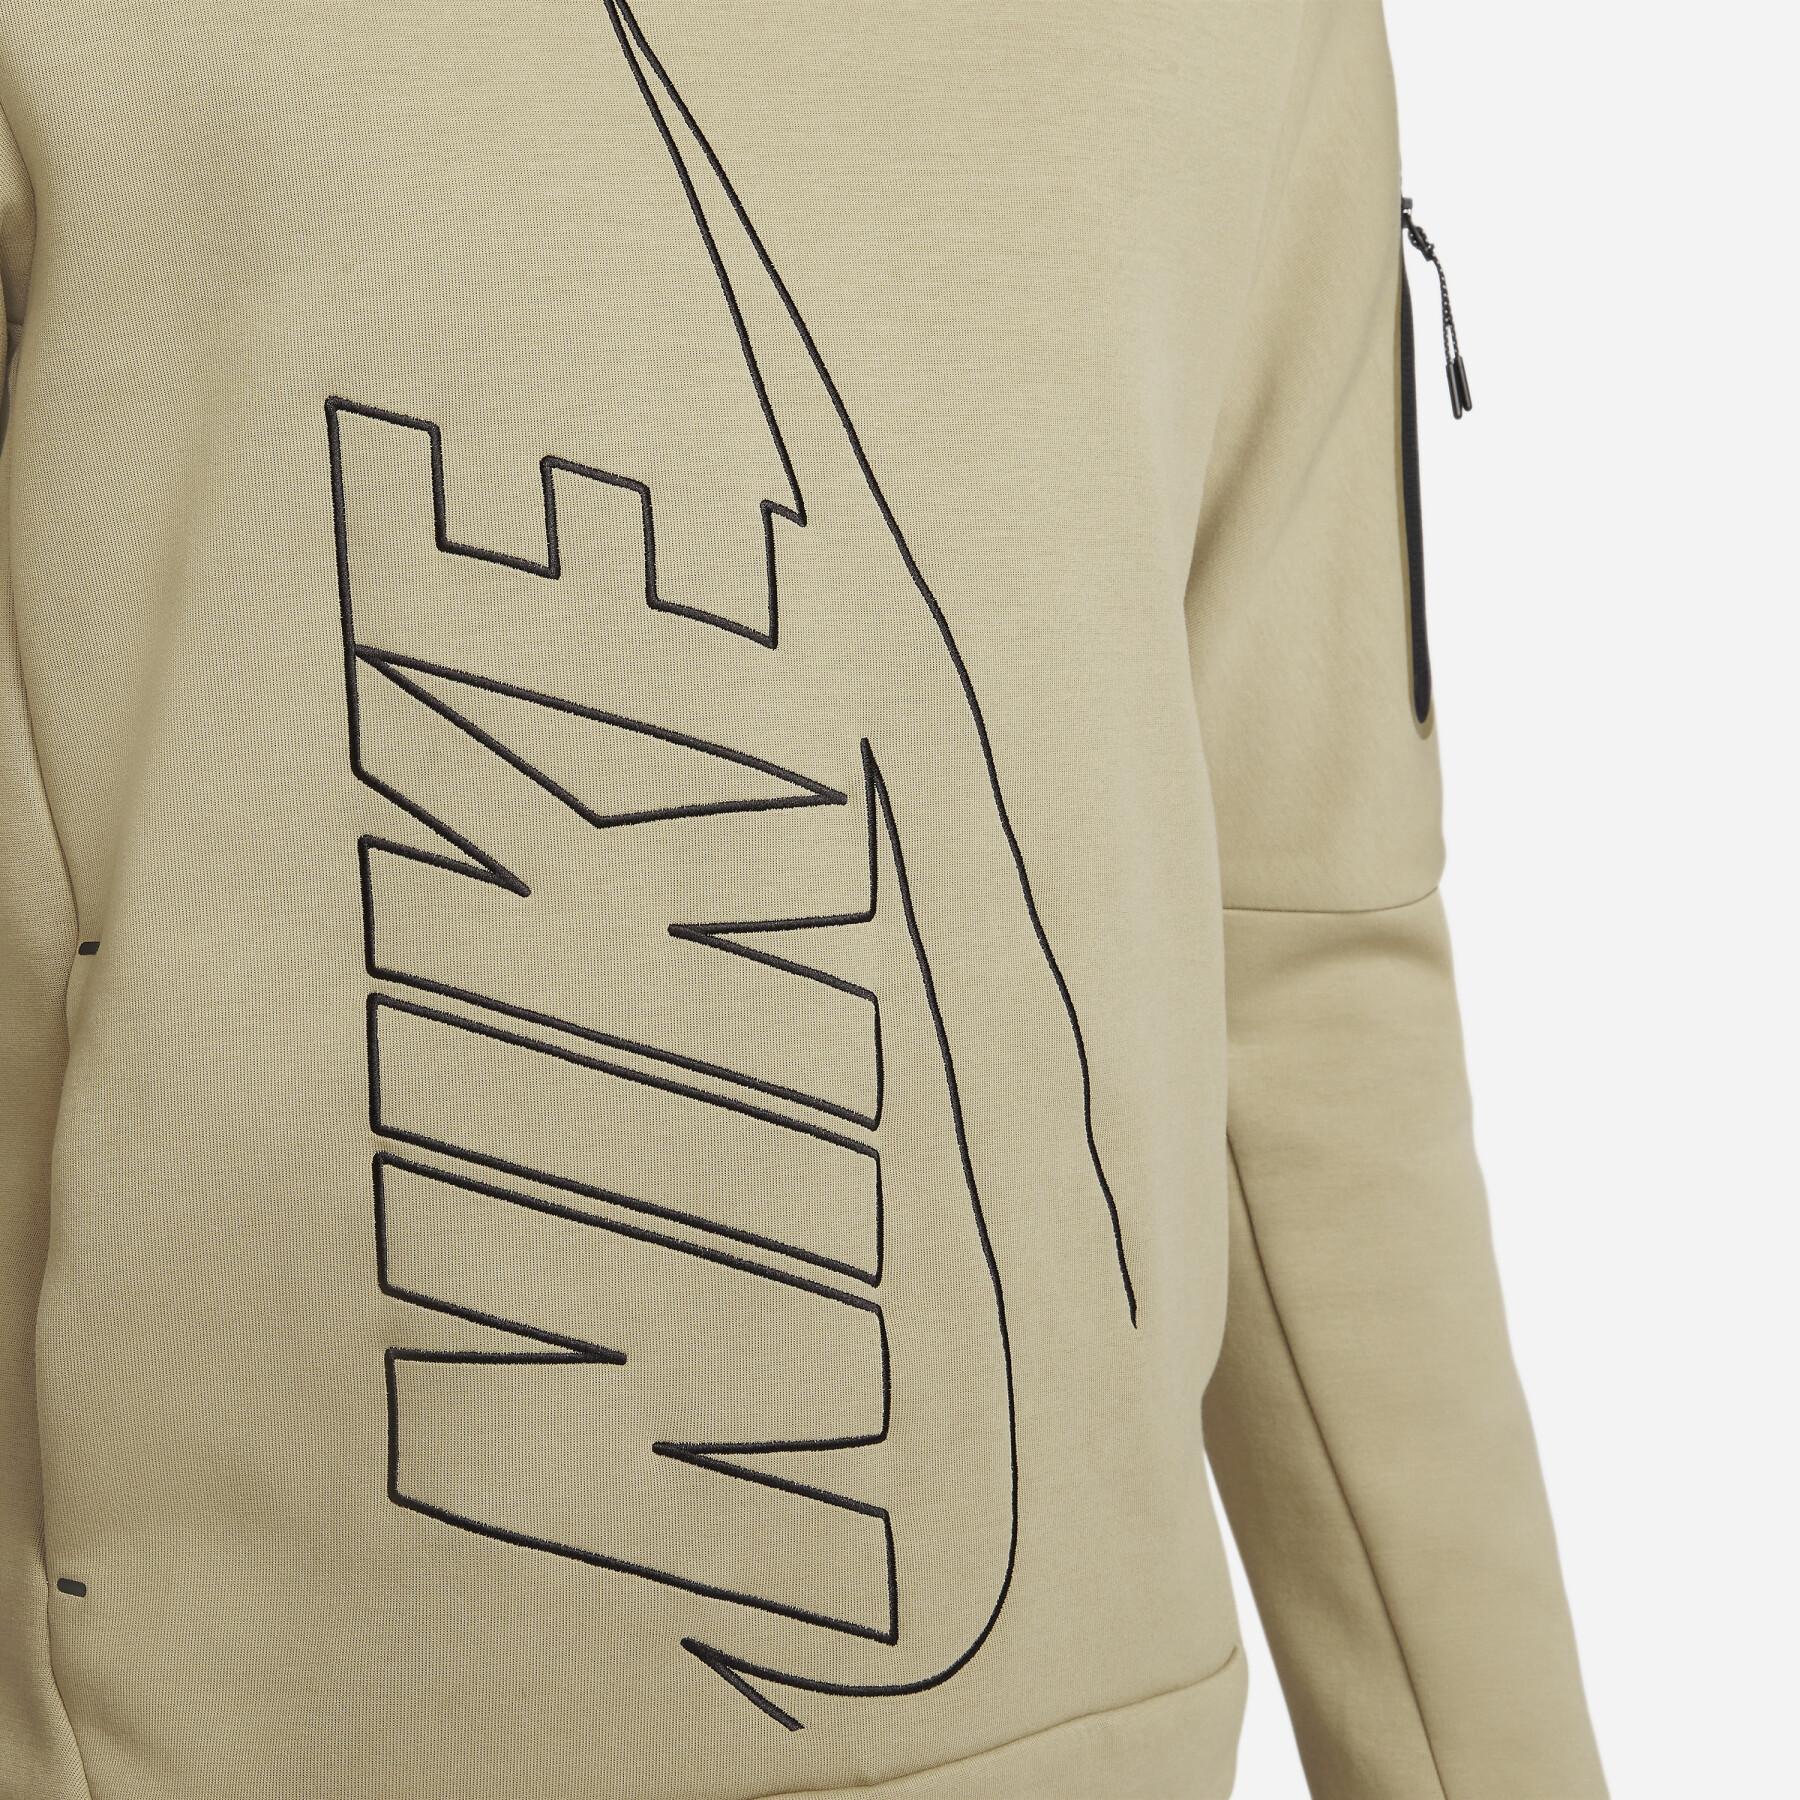 Sweatshirt encapuçado Nike Tech Fleece GX